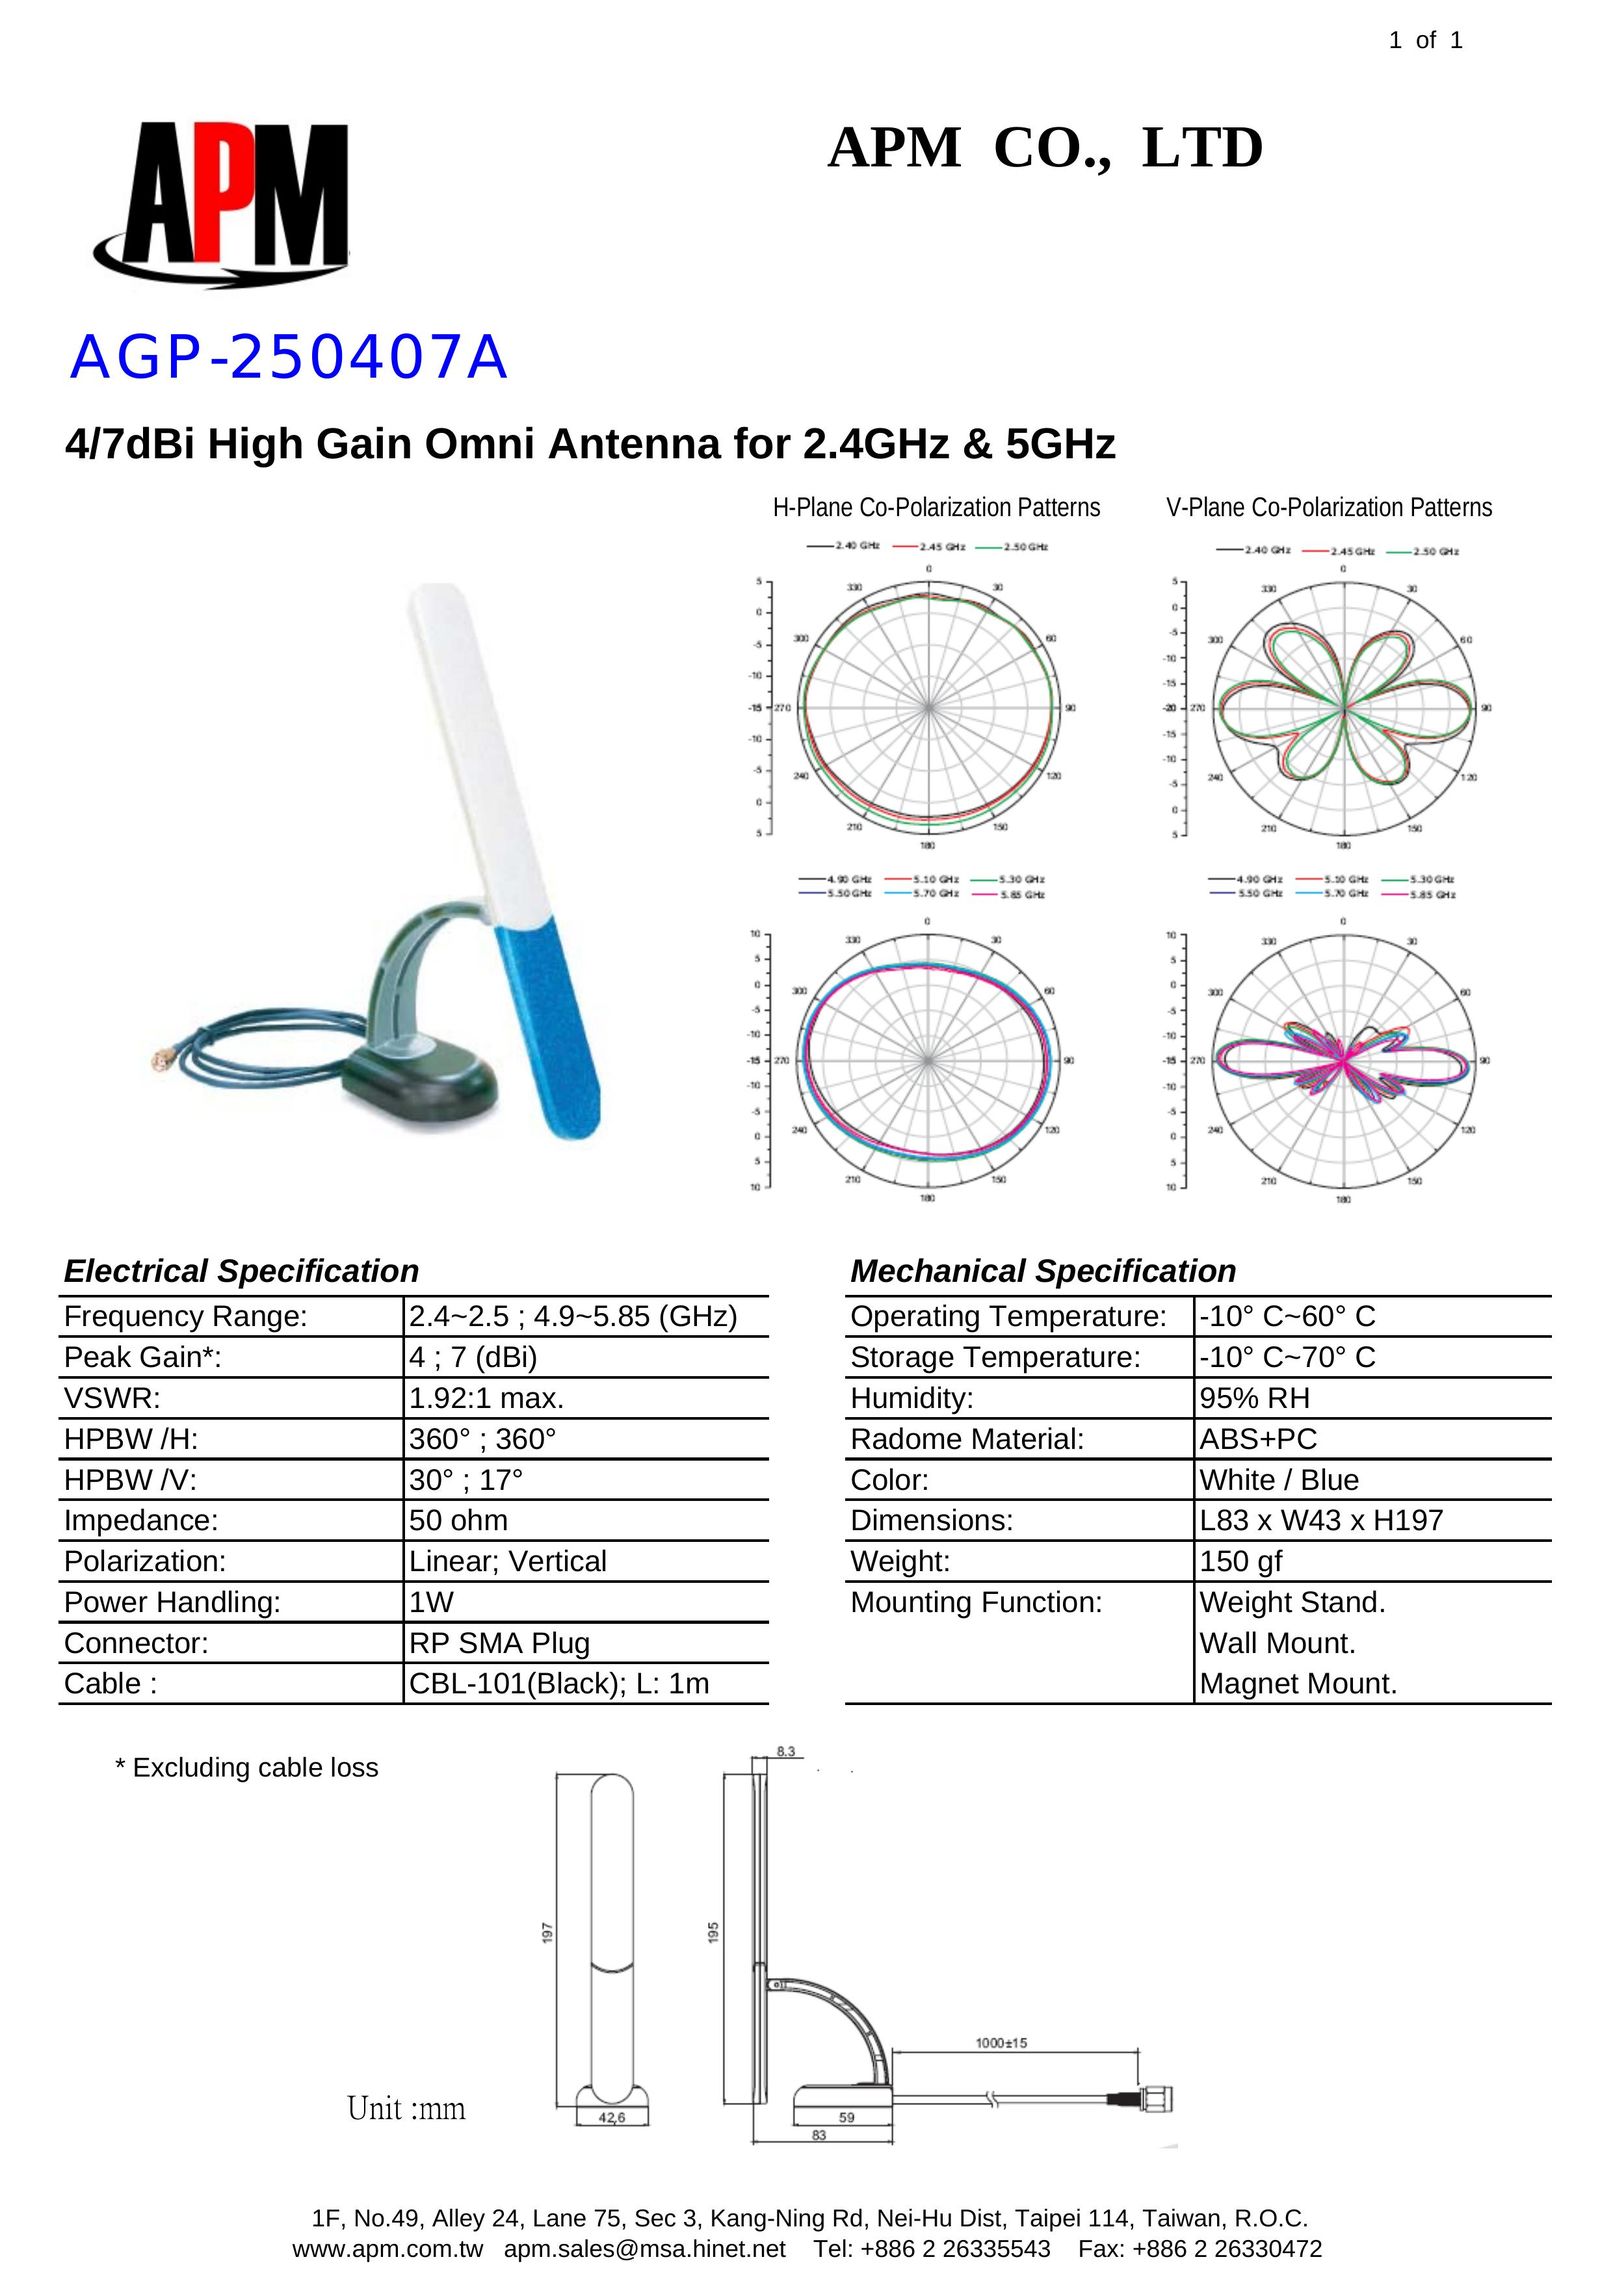 APM AGP-250407A Satellite Radio User Manual